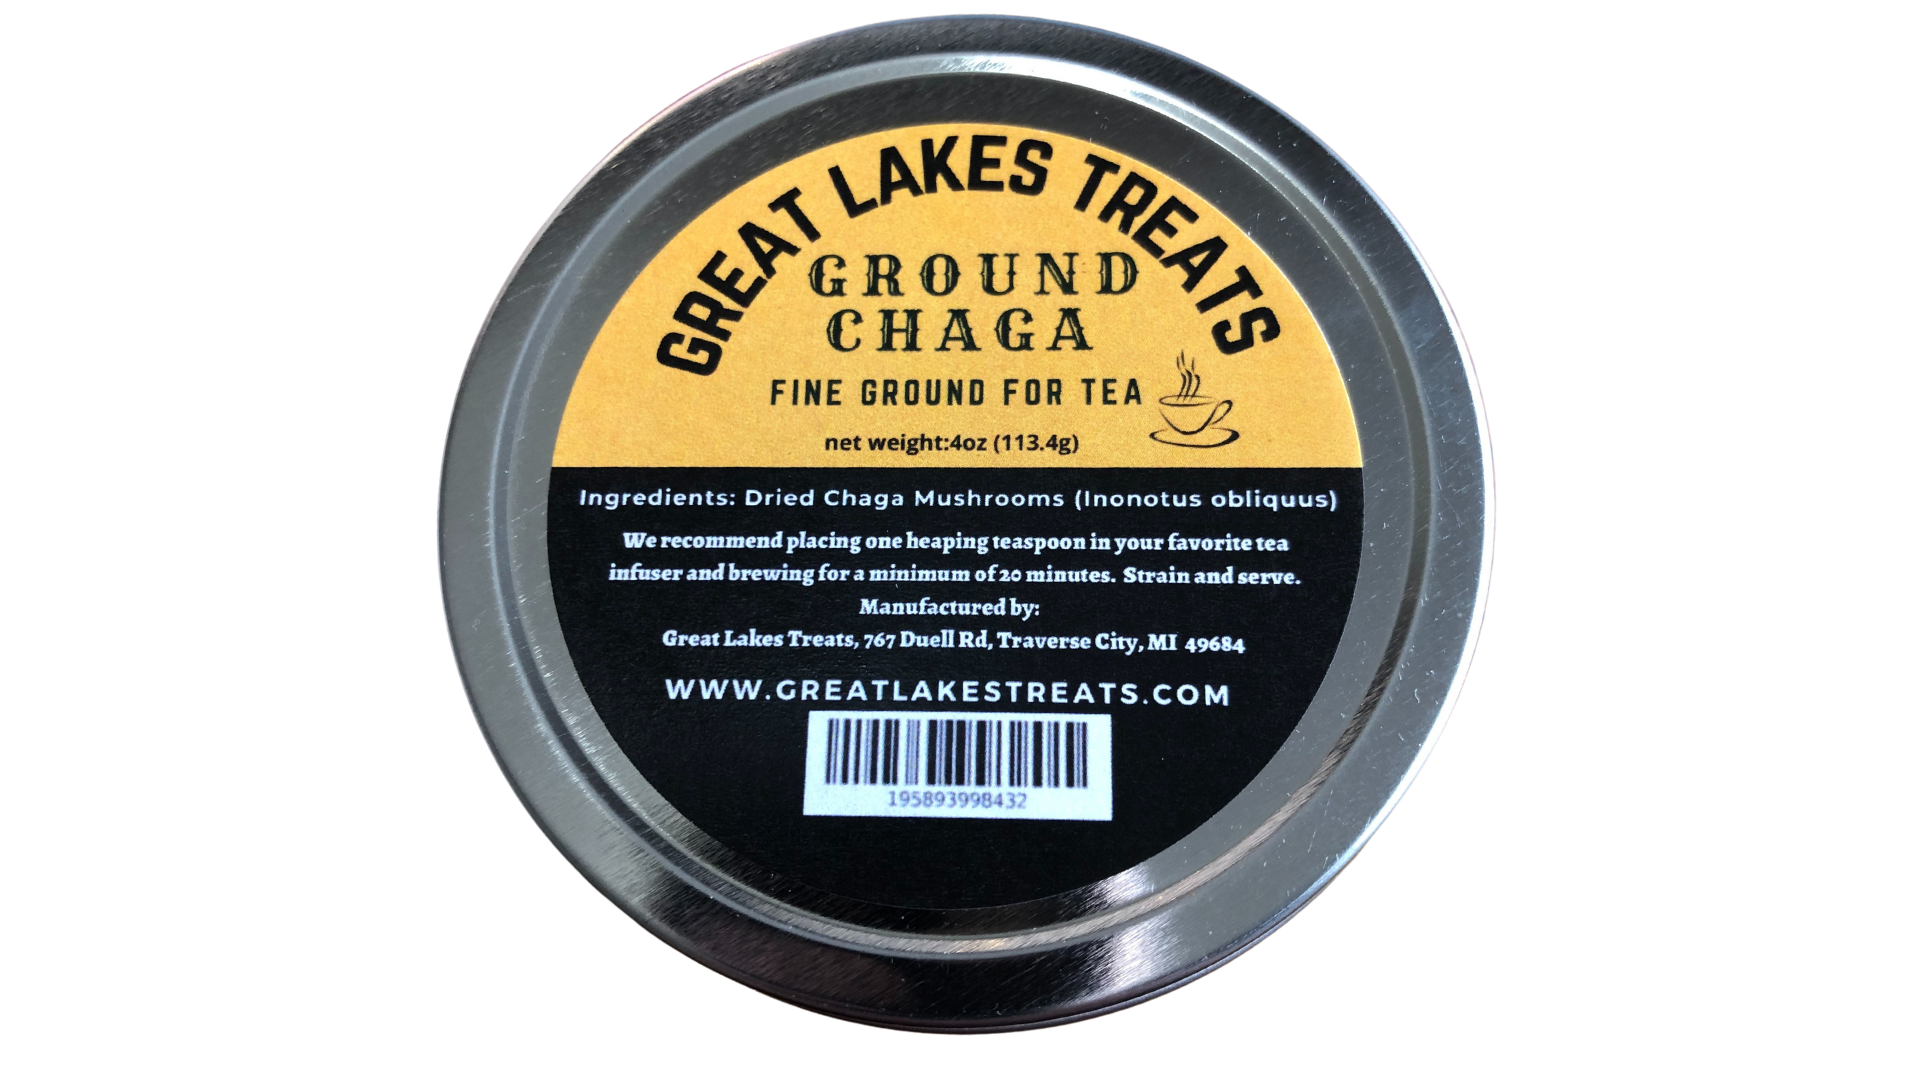 Great Lakes Treats Ground Chaga Tea (4oz)